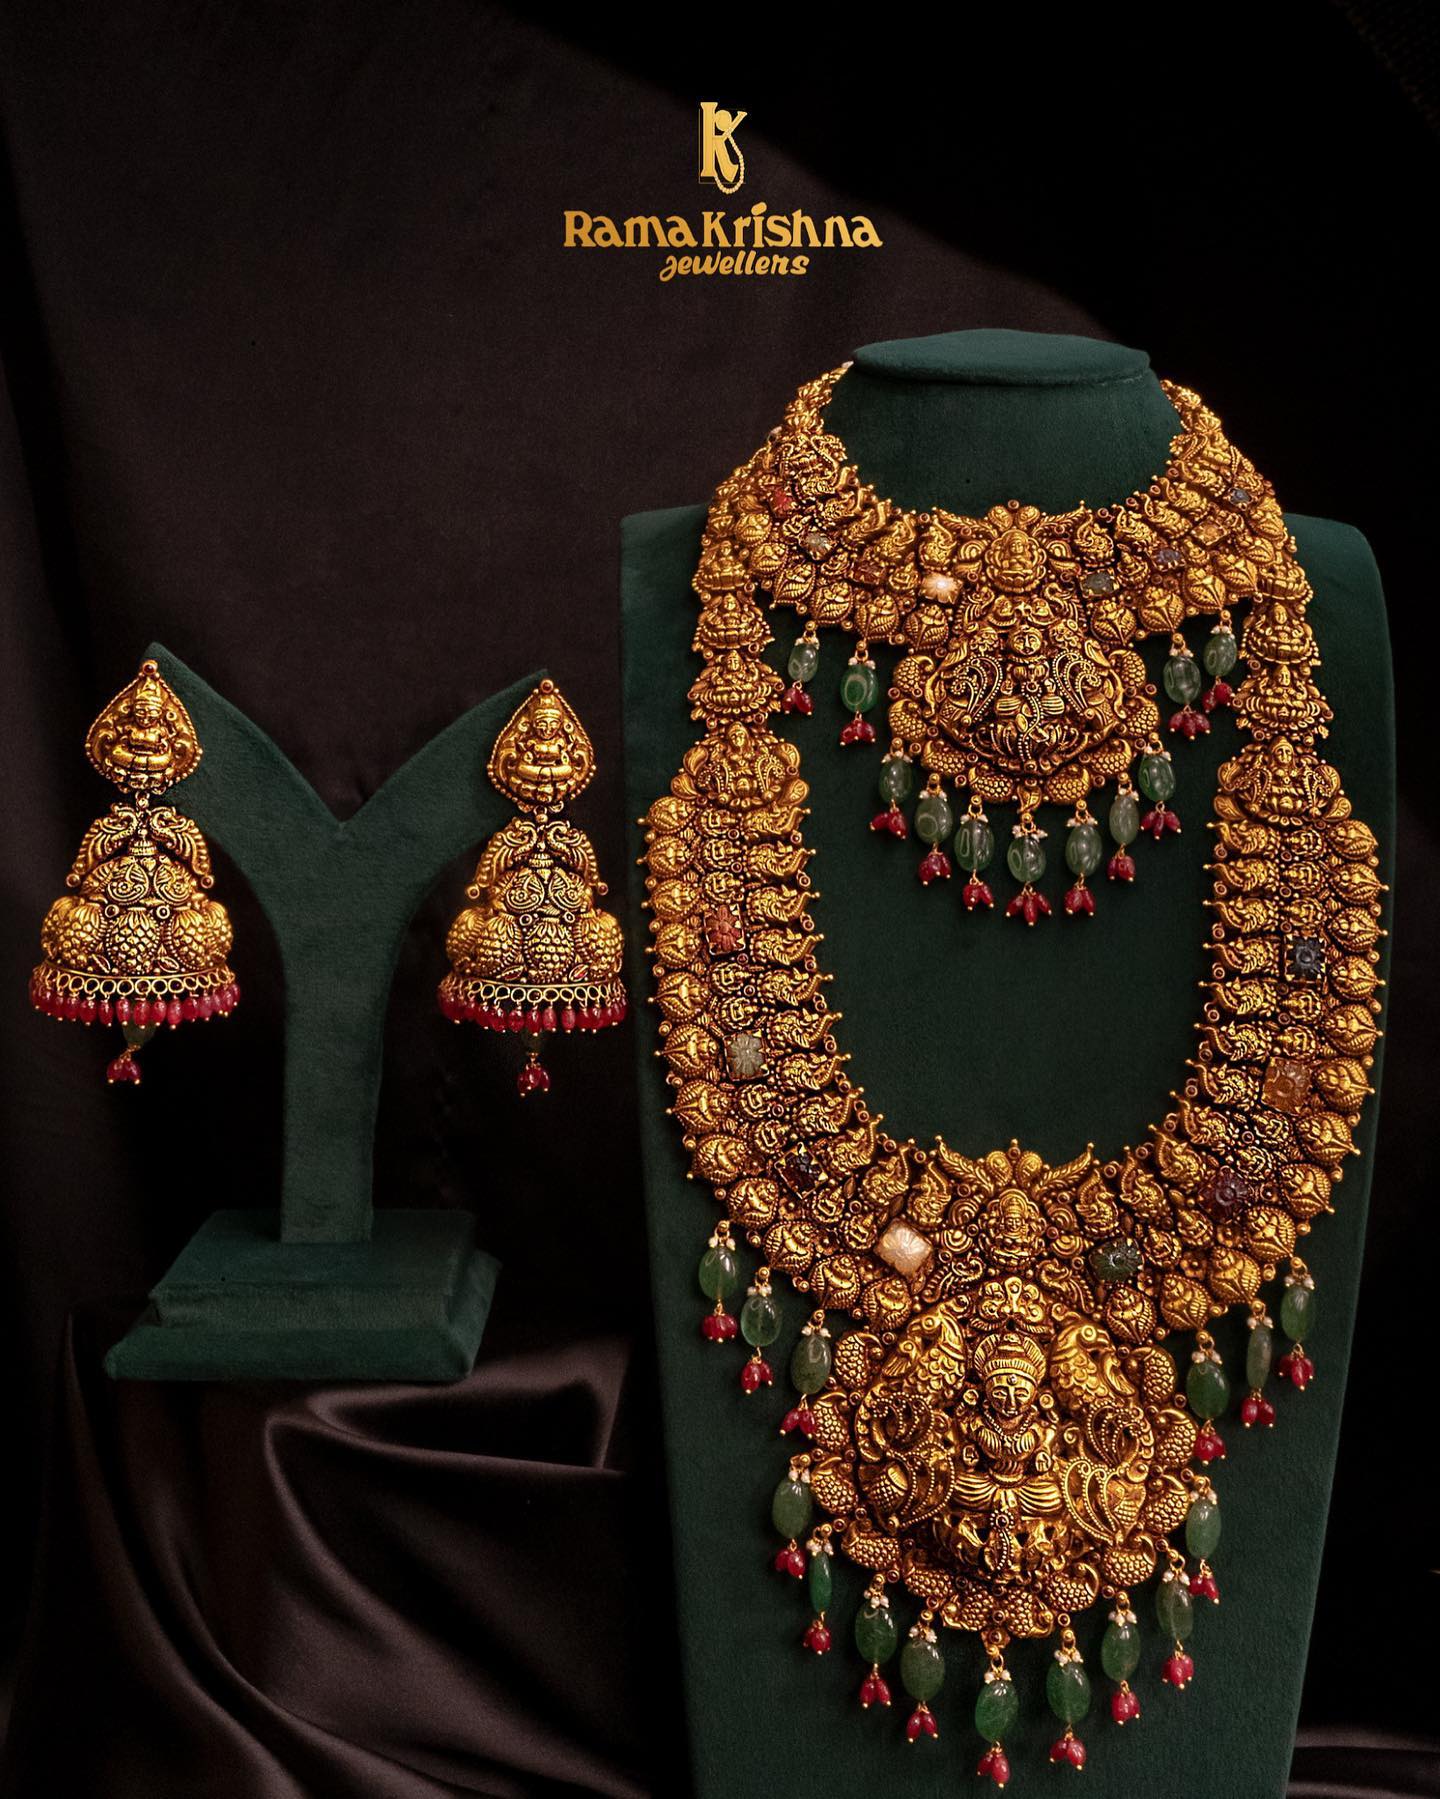 Rama krishna jewellers review